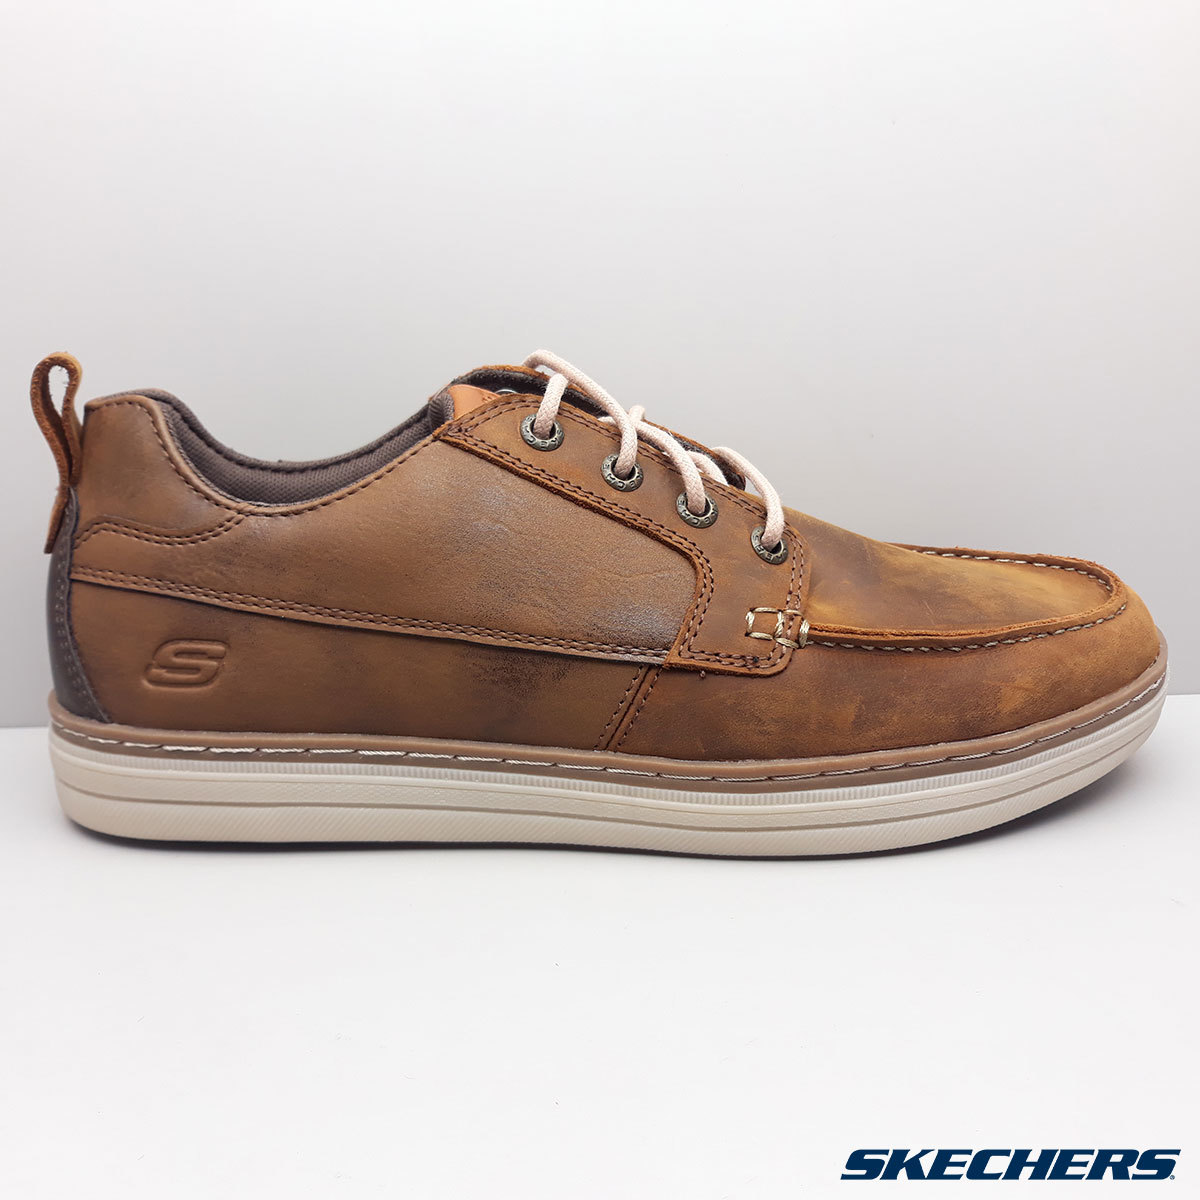 sketcher mens leather shoes